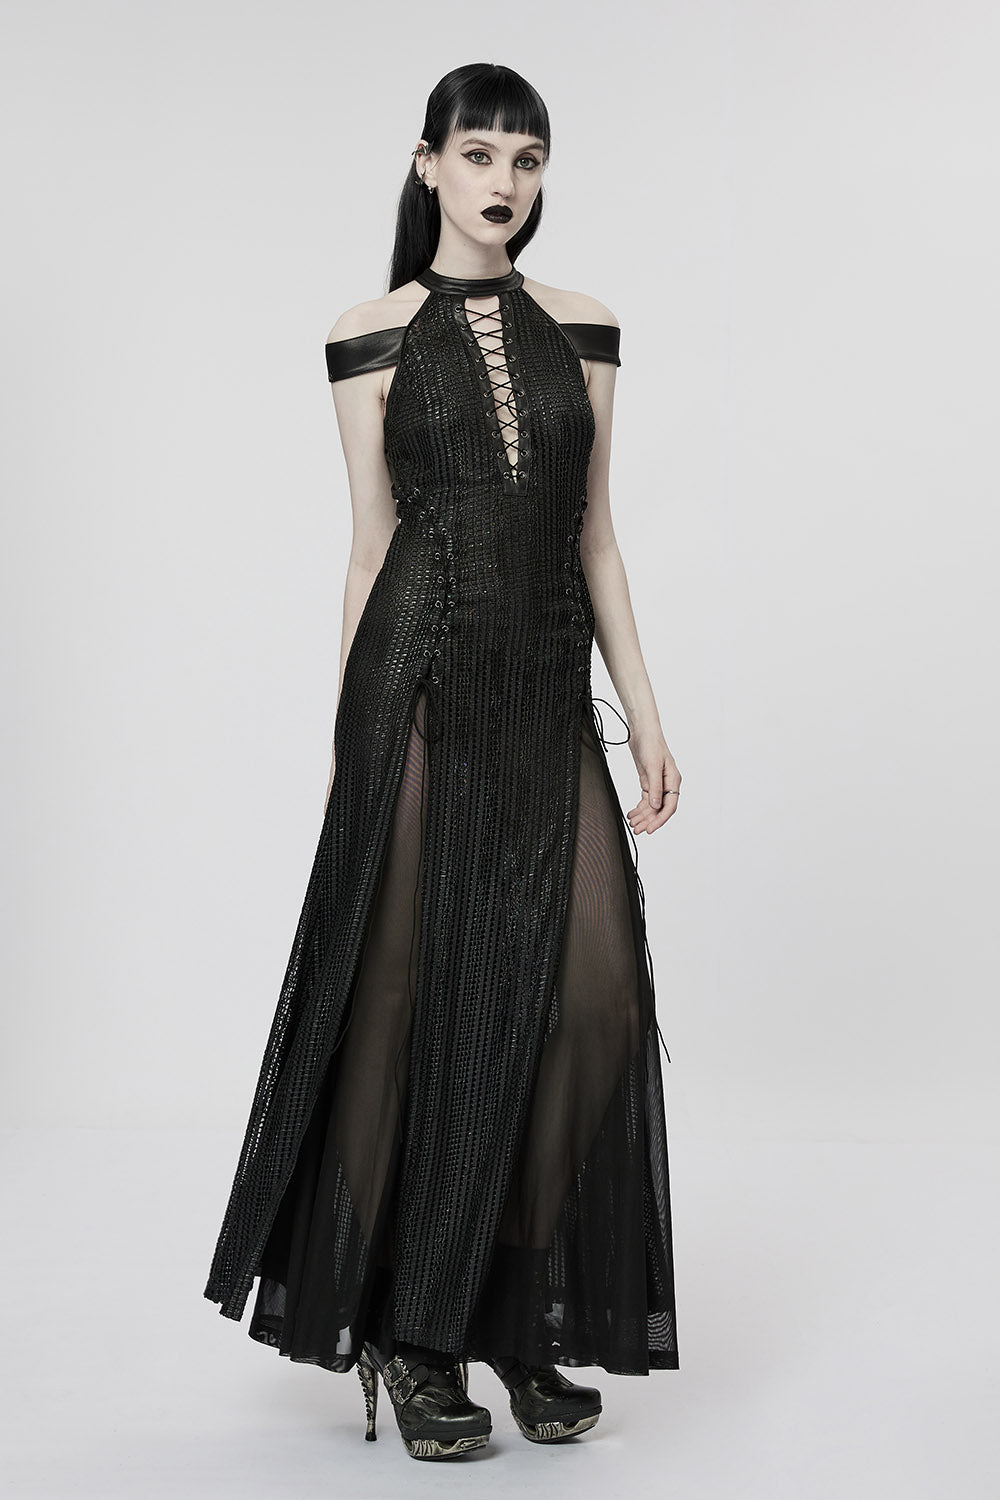 medusa gothic dress